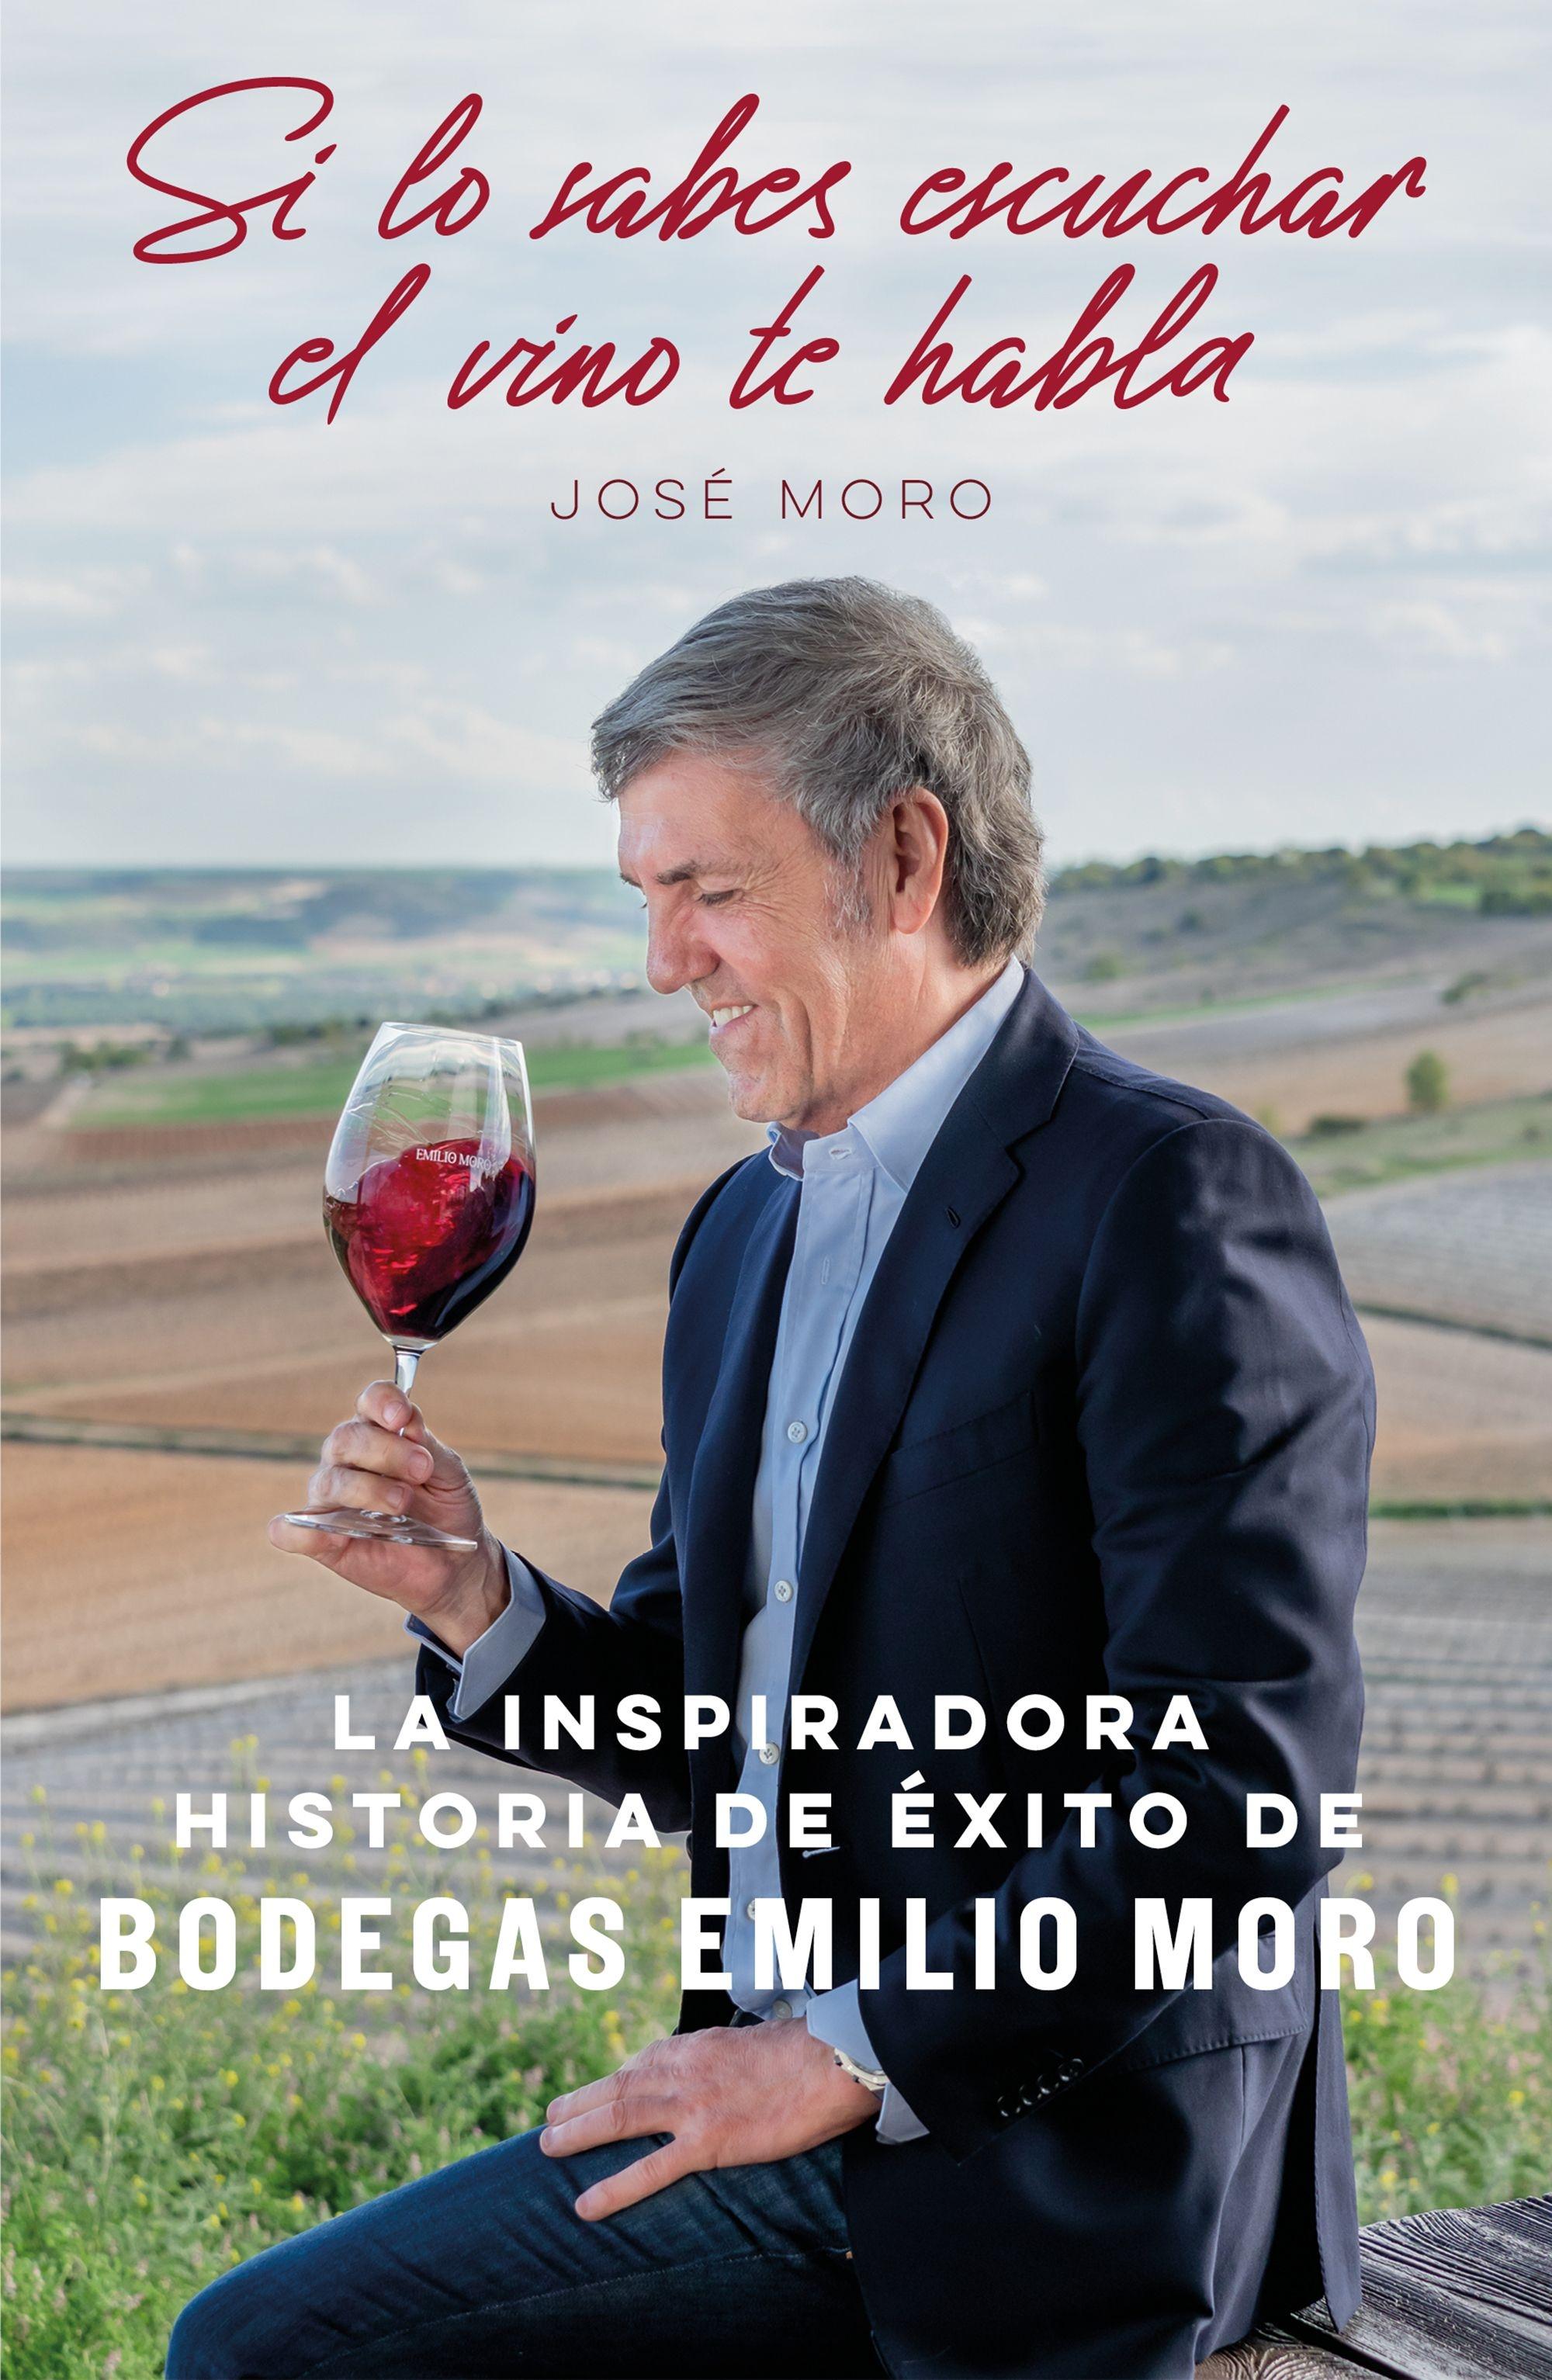 Si lo Sabes Escuchar, el Vino te Habla "La Inspiradora Historia de Éxito de Bodegas Emilio Moro". 